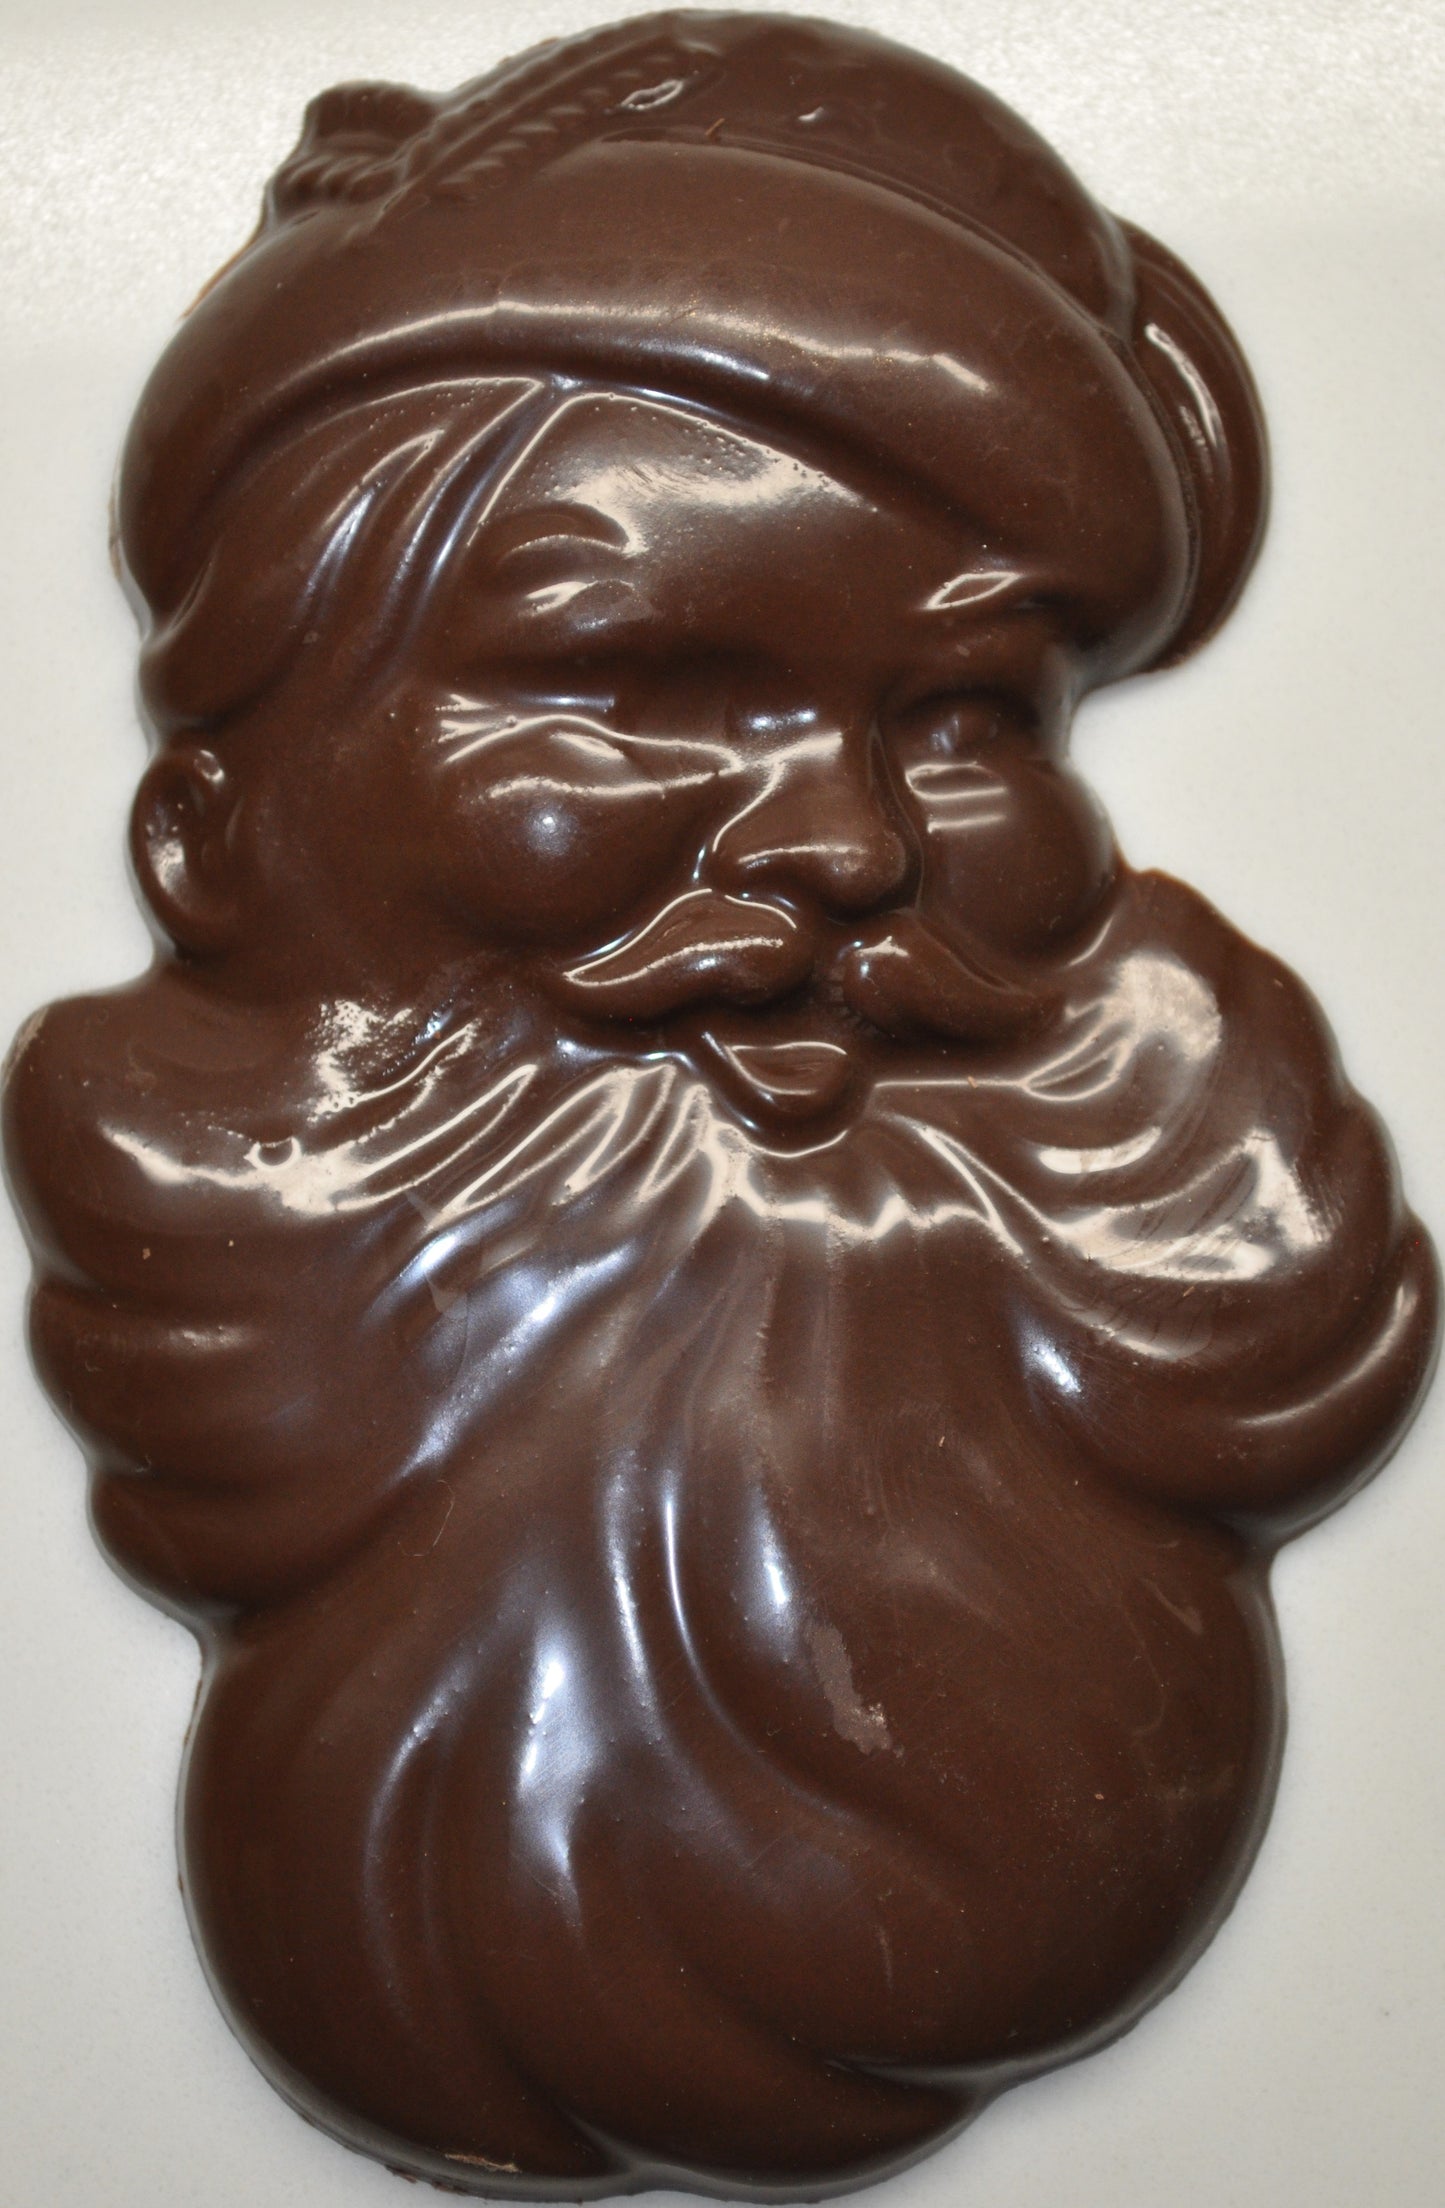 Santa Face with Dark Chocolate